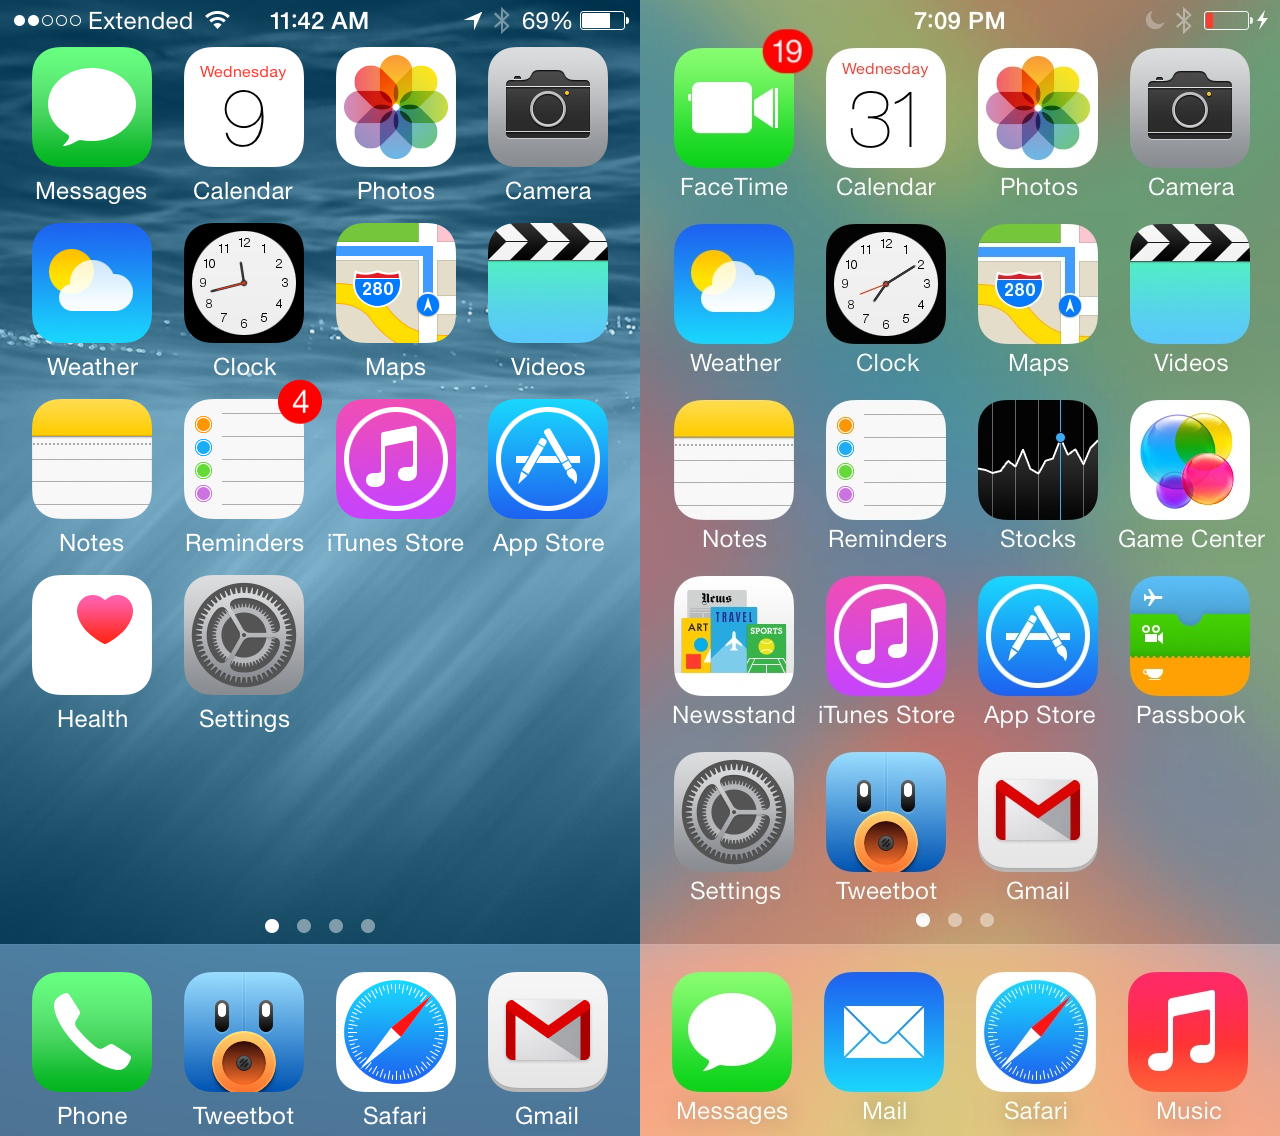 iOS 8 vs iOS 7 design looks very much the same.